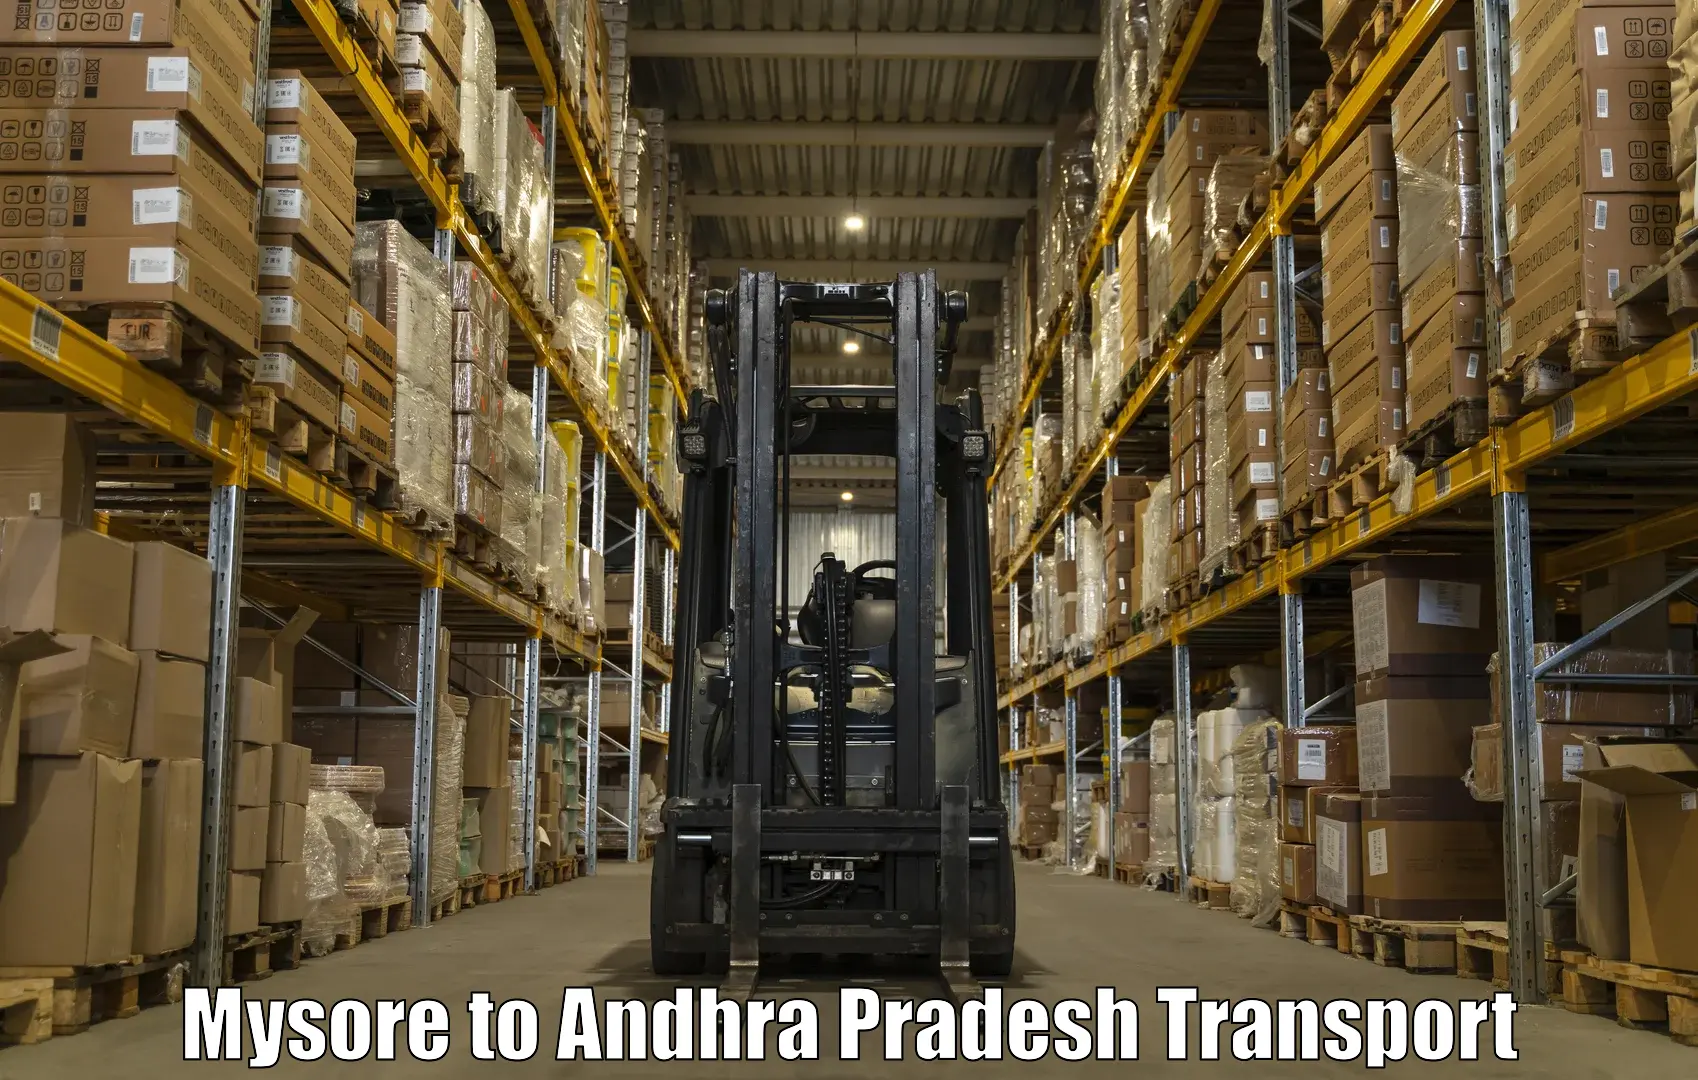 Goods delivery service Mysore to Andhra Pradesh